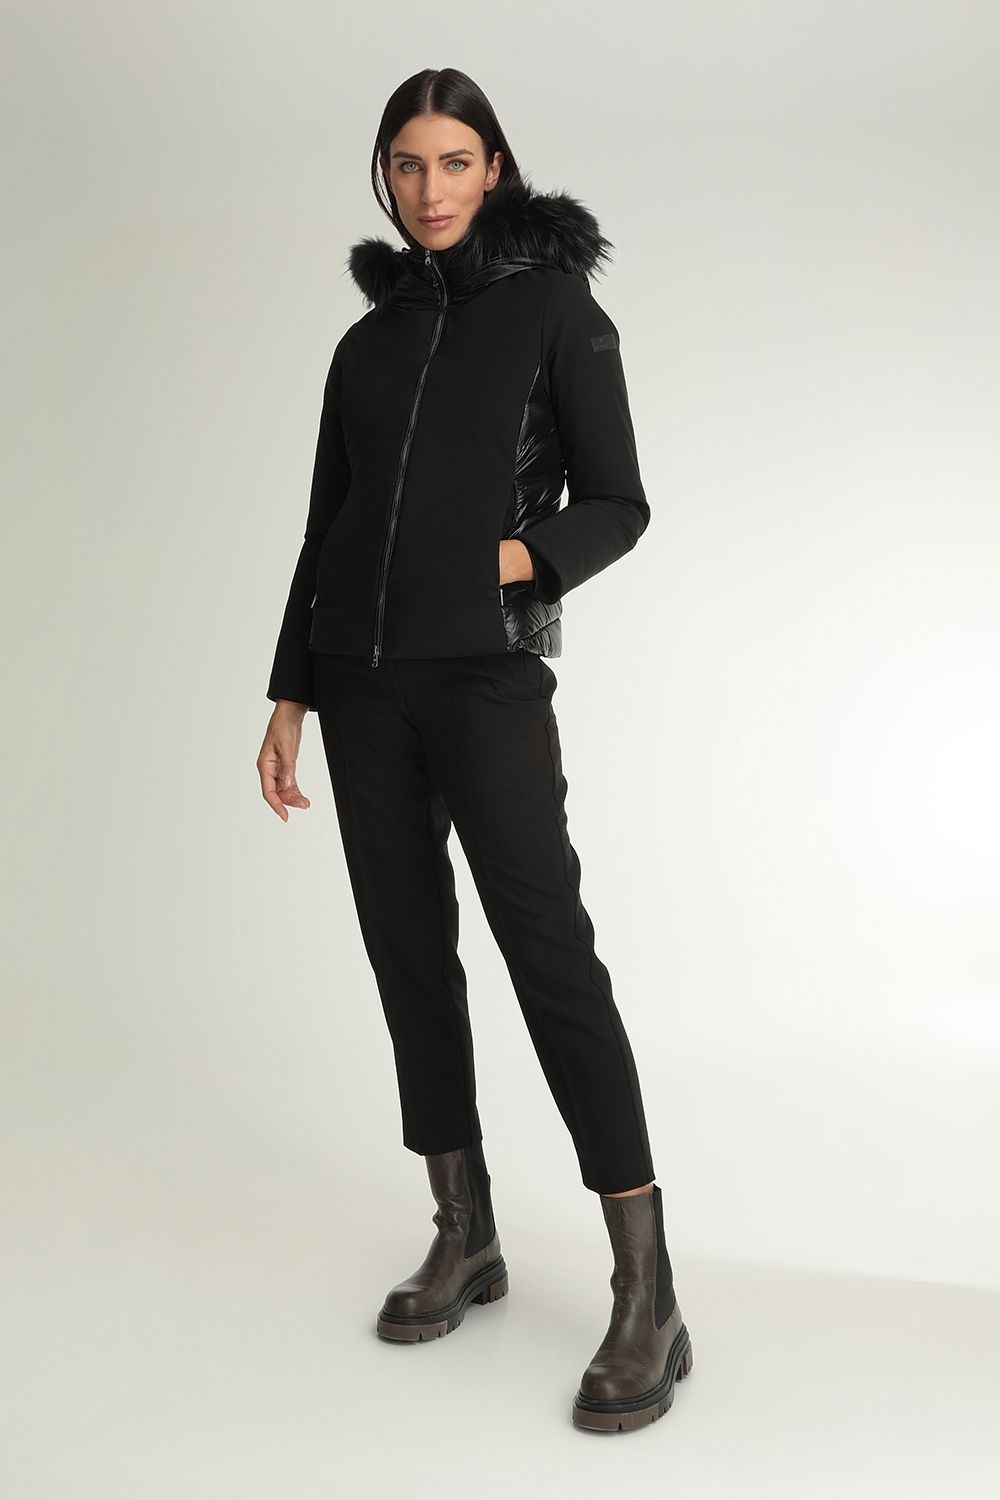 Women's short down jackets Hetregó  Winter Collection 2020-21